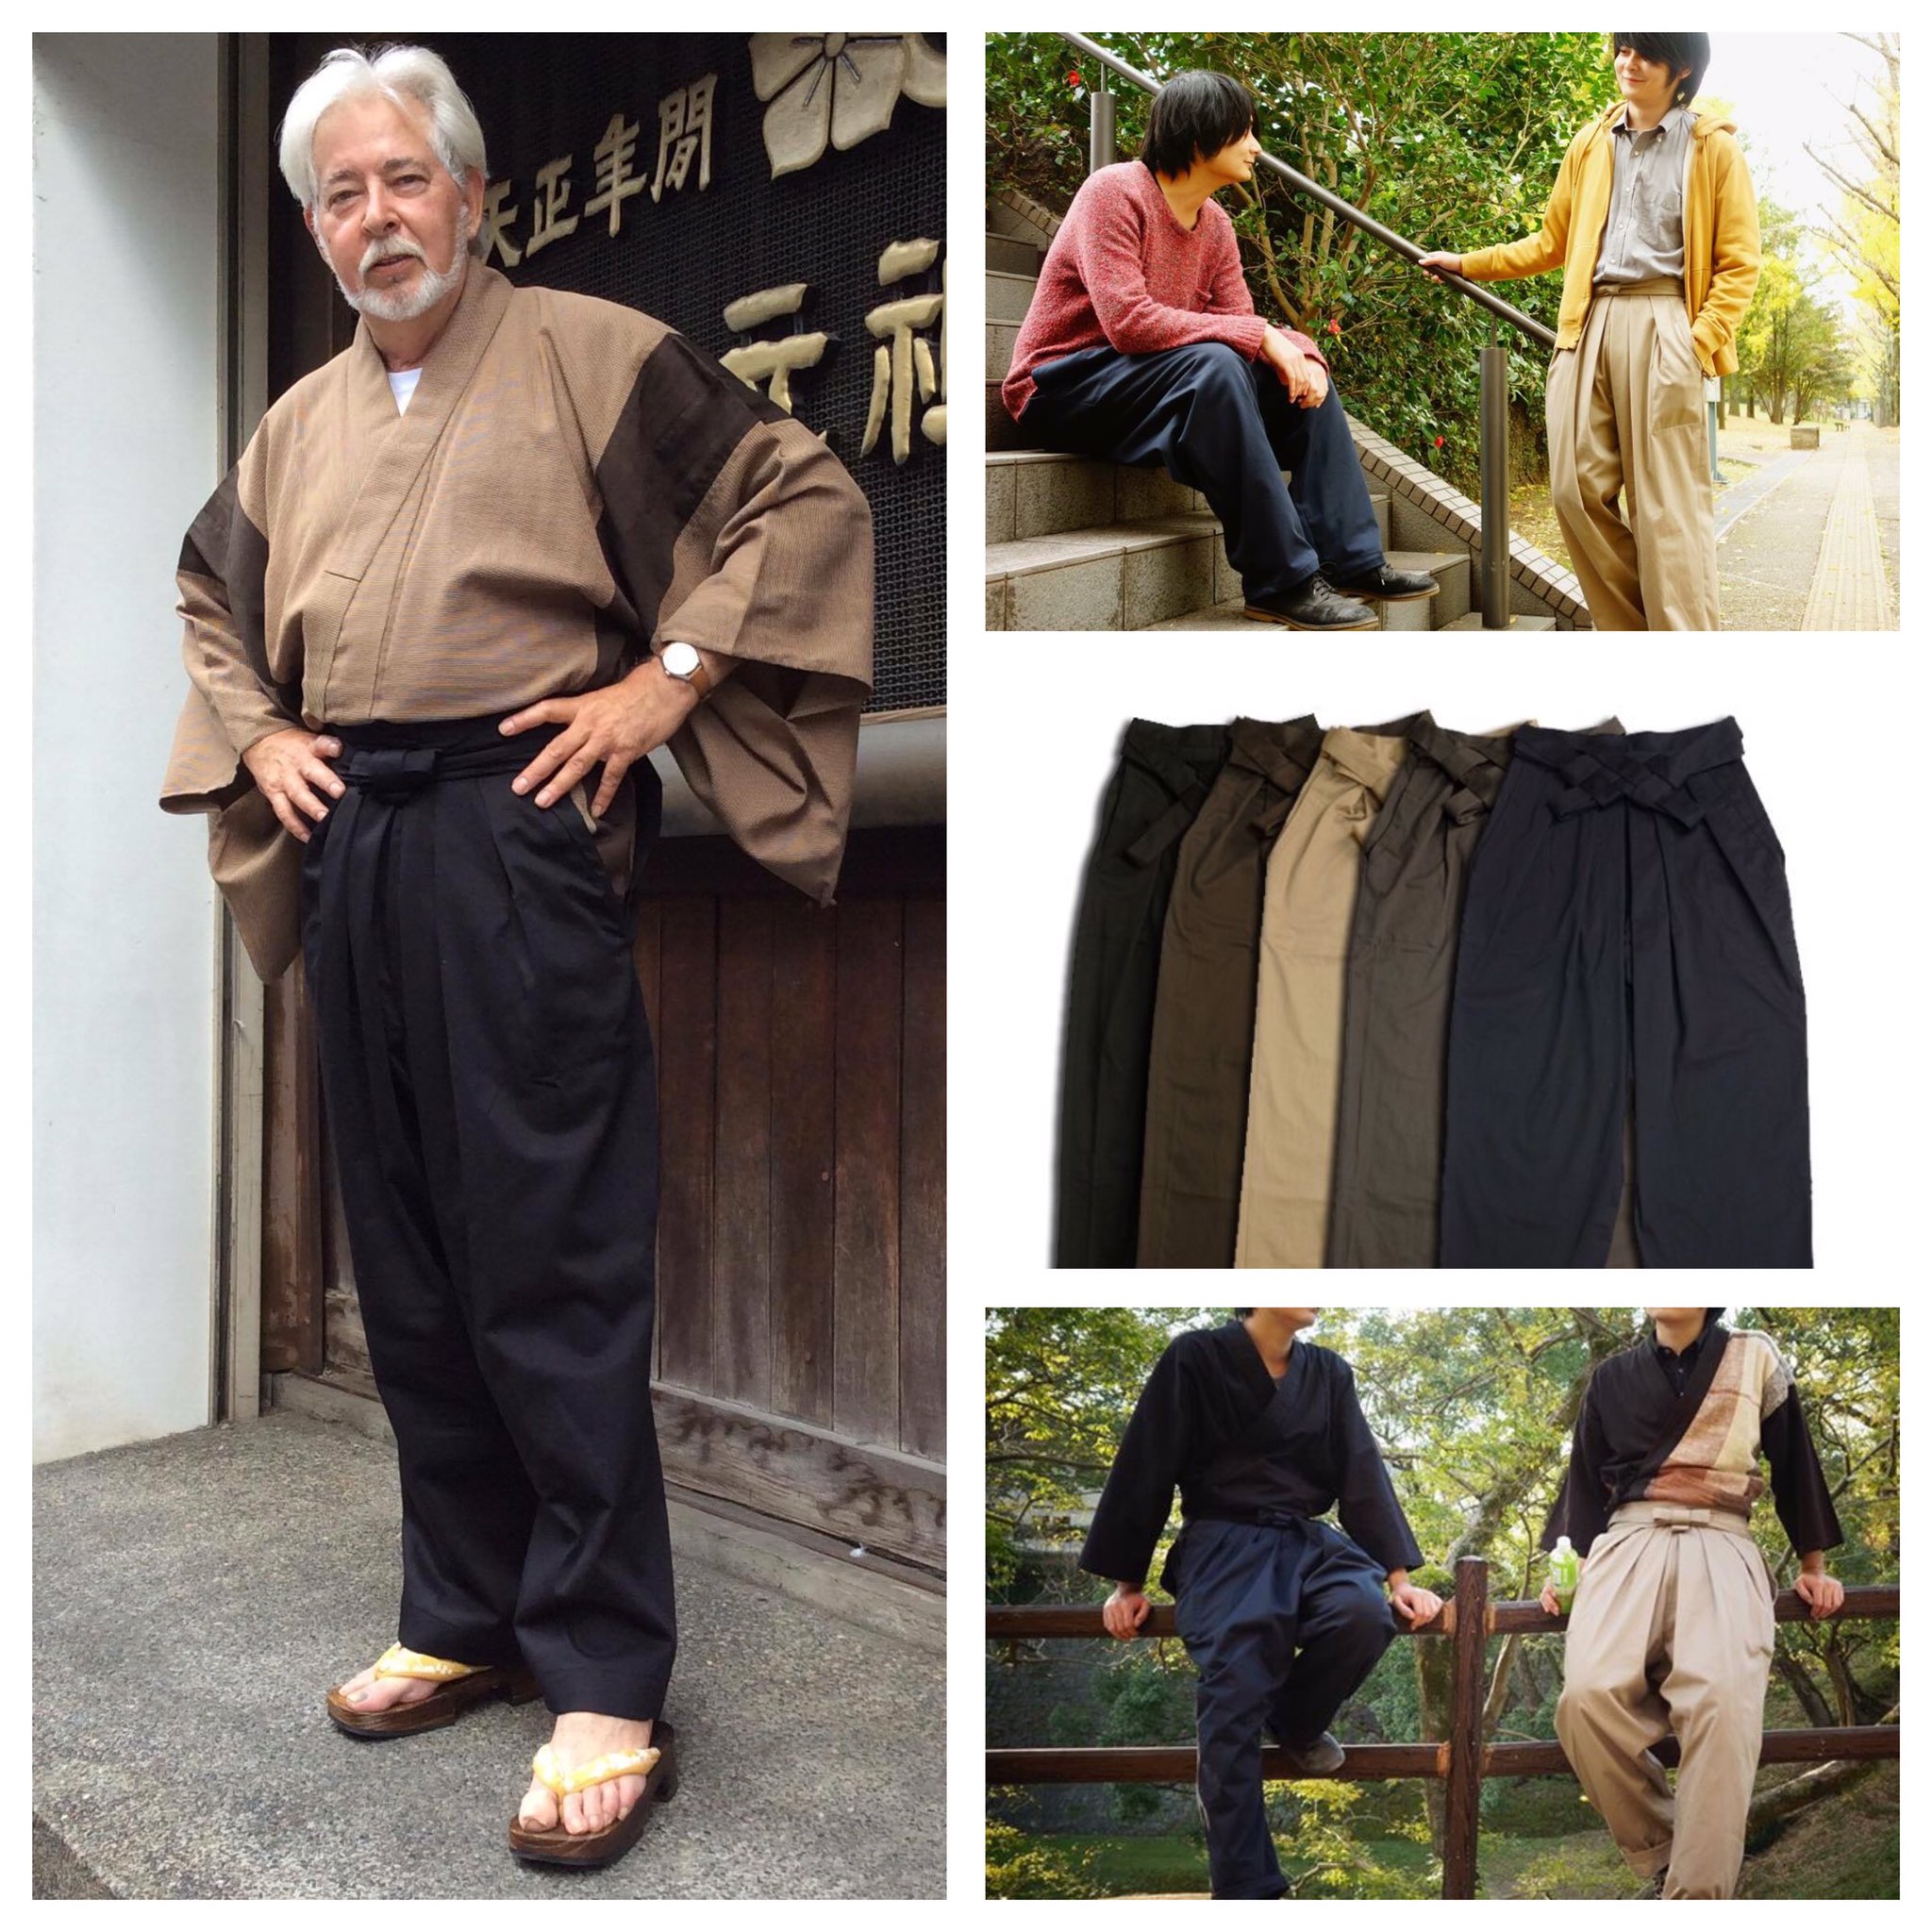 Haori Jacket Traditional Japanese Samurai Kimono Set Kendo Gi Hakama Pants  Asian Cultures & Ethnicities tagumdoctors.edu.ph